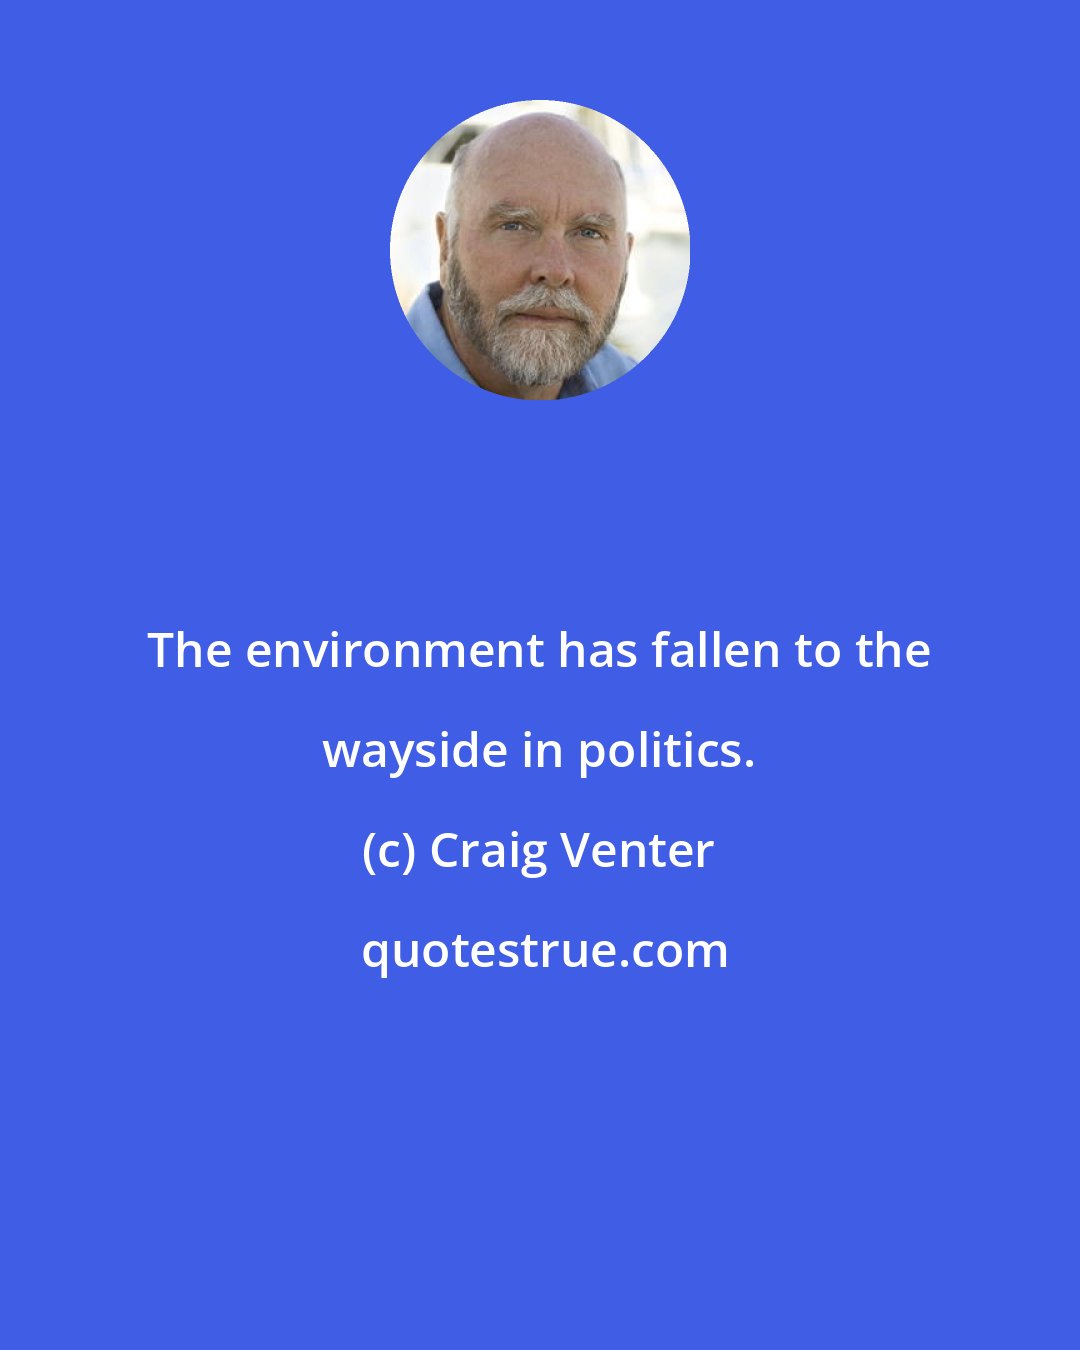 Craig Venter: The environment has fallen to the wayside in politics.